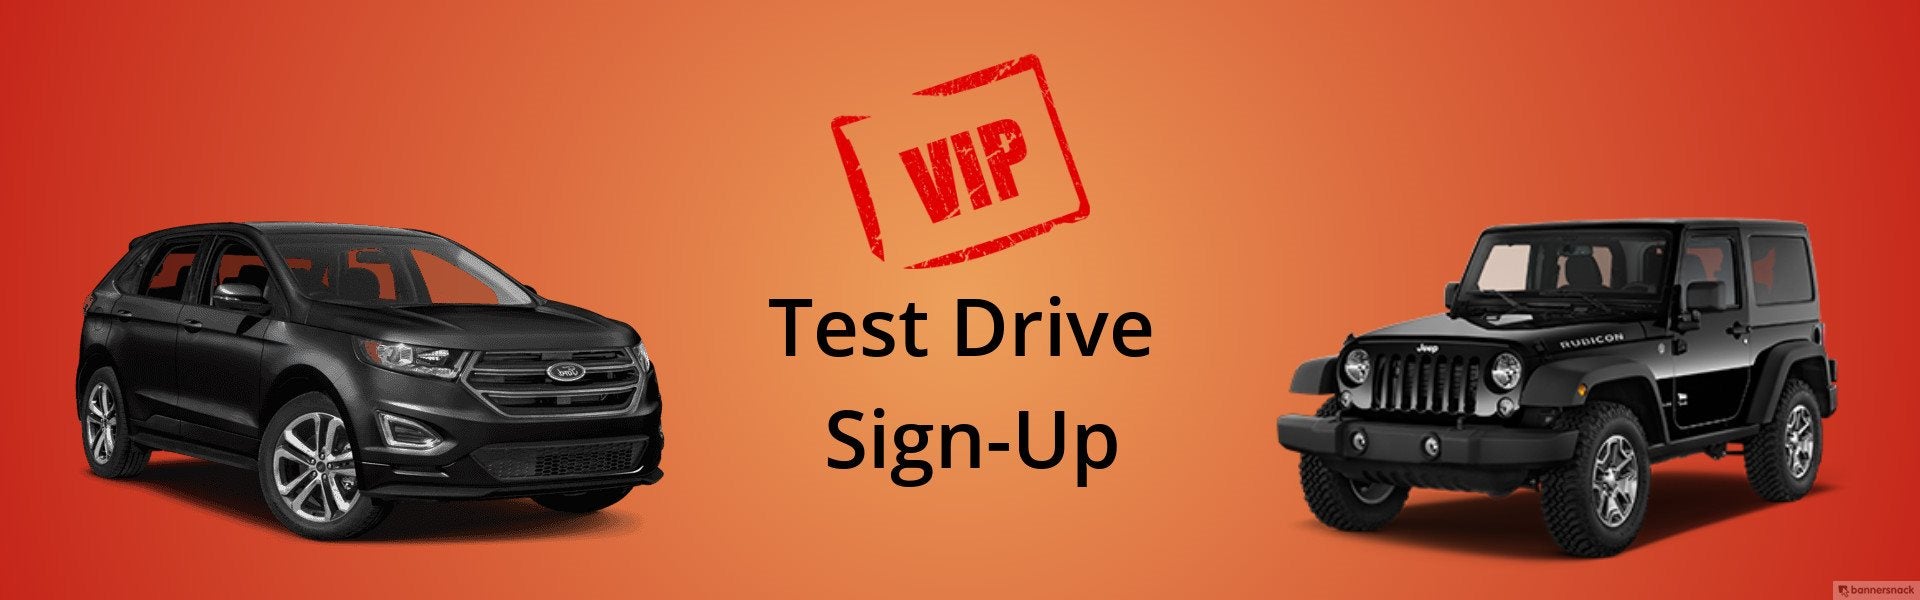 VIP test drive